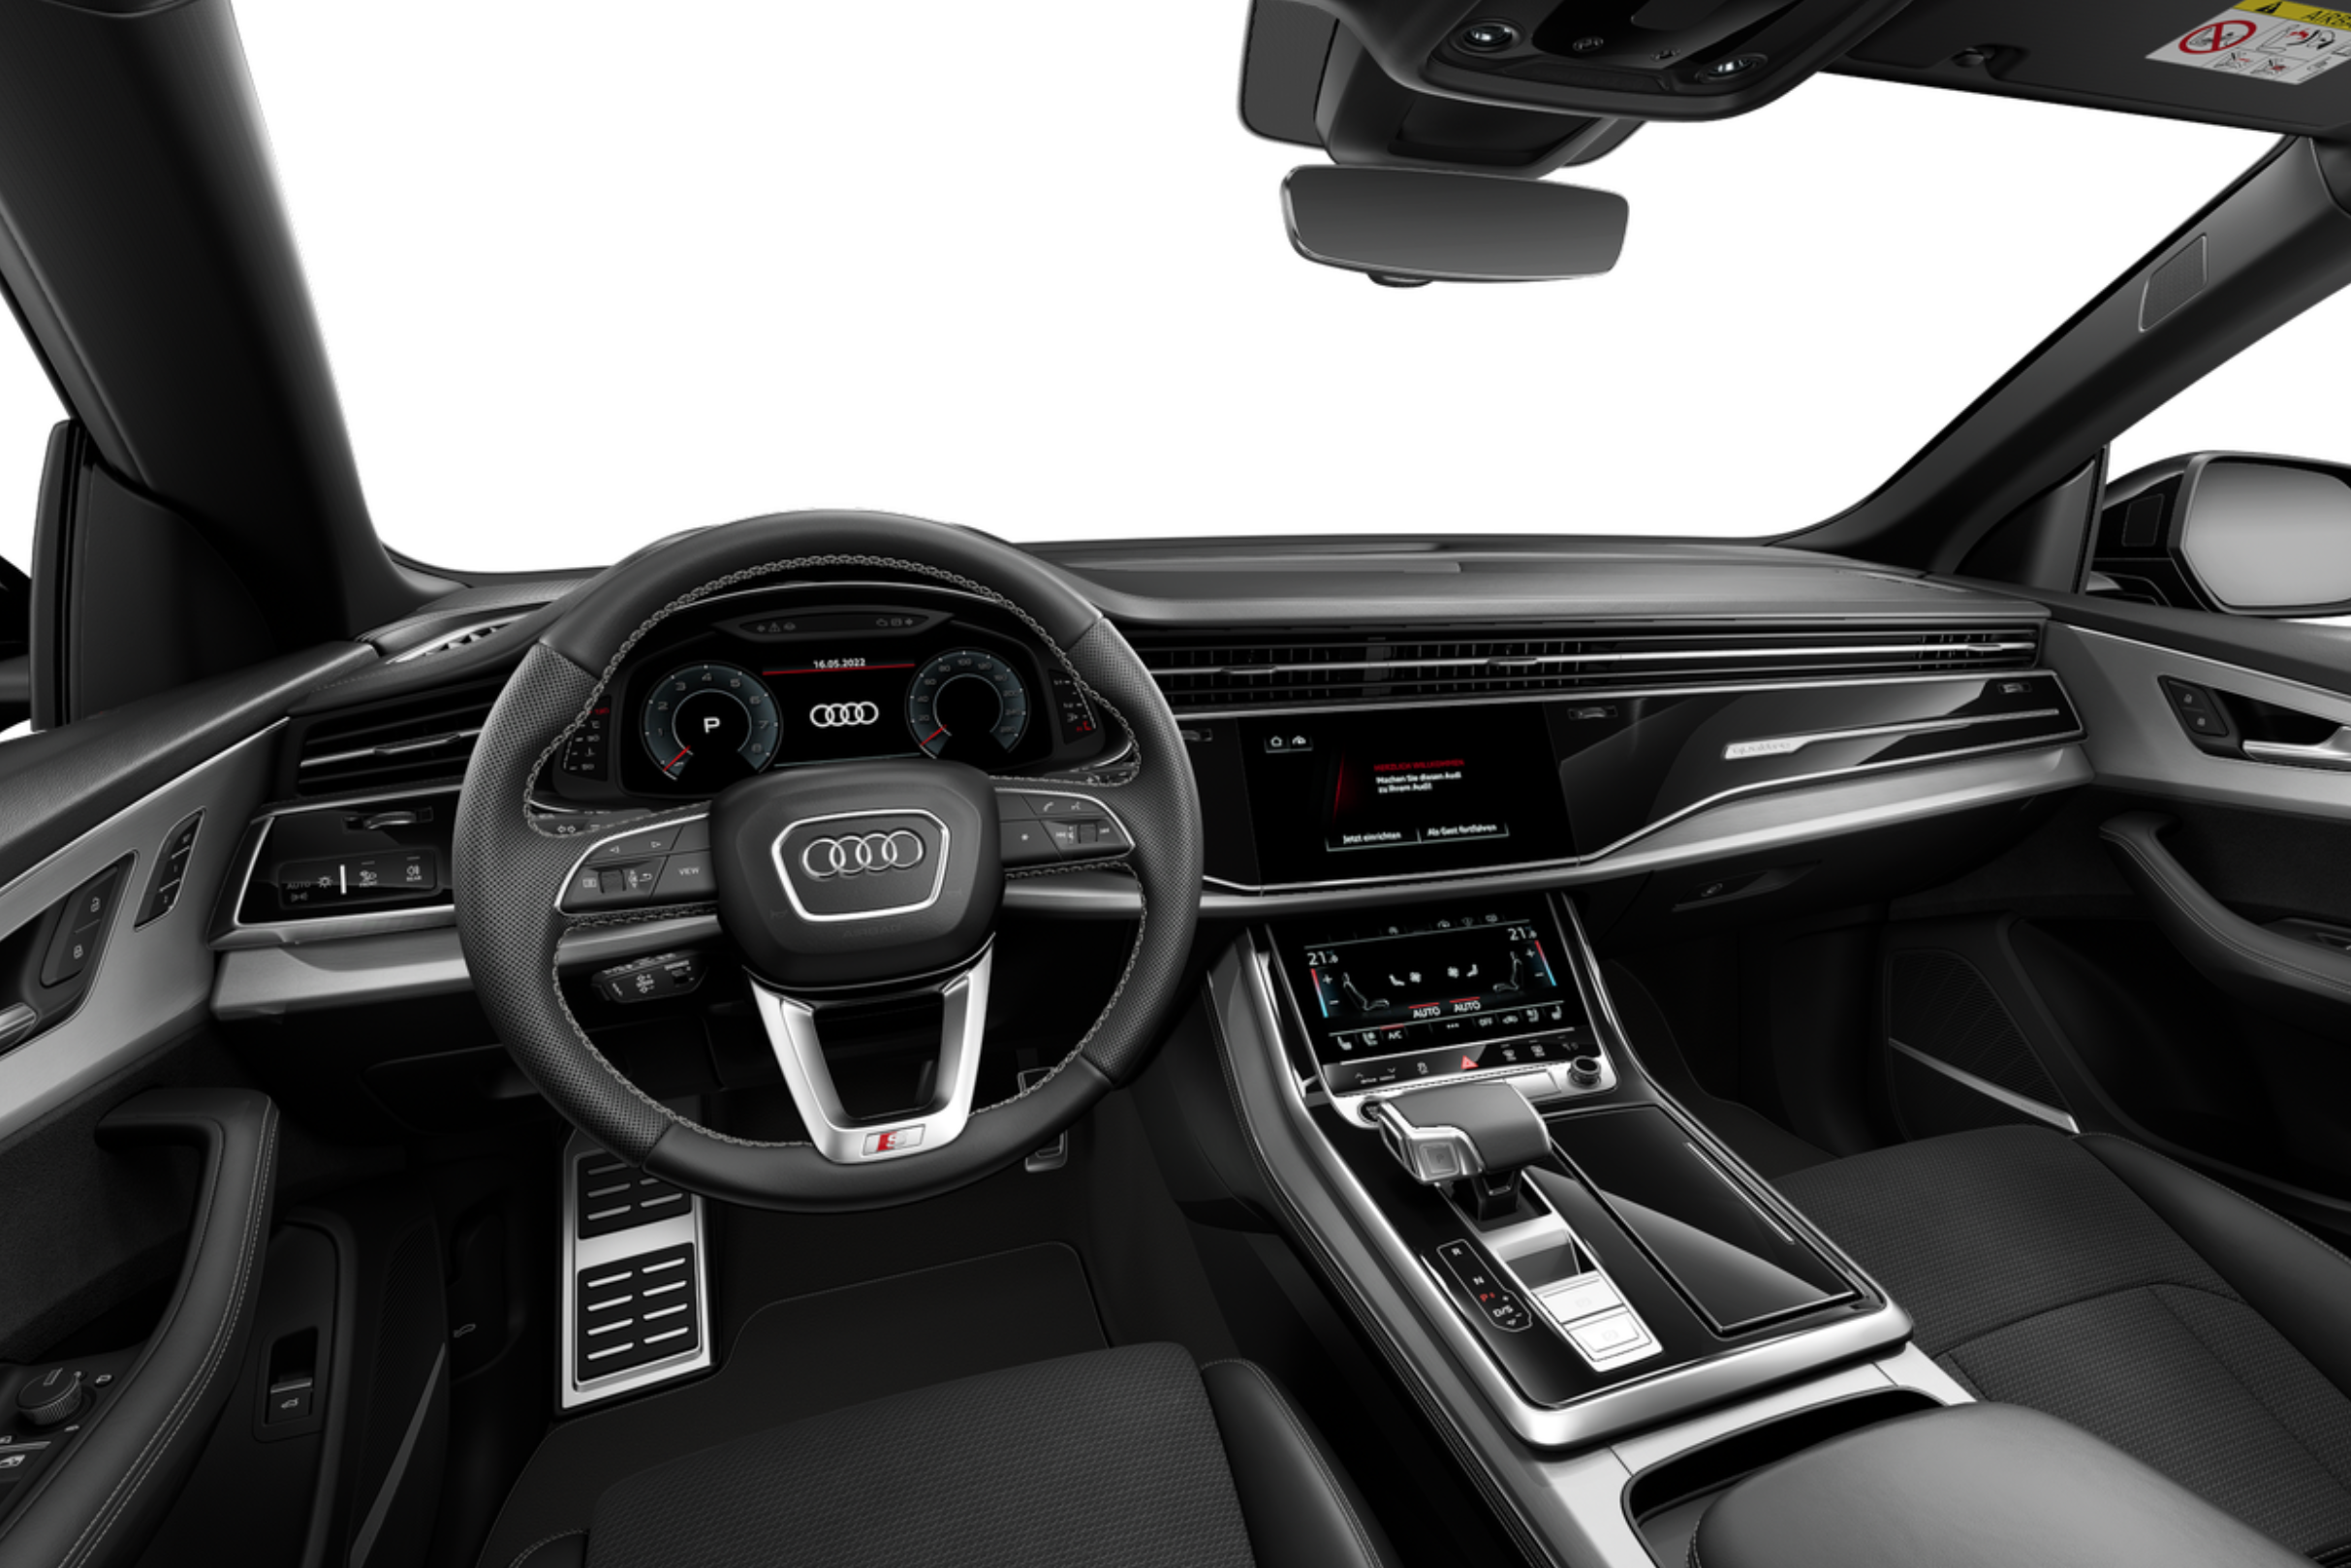 Audi Q8 55 TFSI quattro tiptronic Sline | nové auto skladem | sportovní benzínové suv coupé | super cena 2.149.000,- Kč bez DPH | více info a nákup online na AUTOiBUY.com